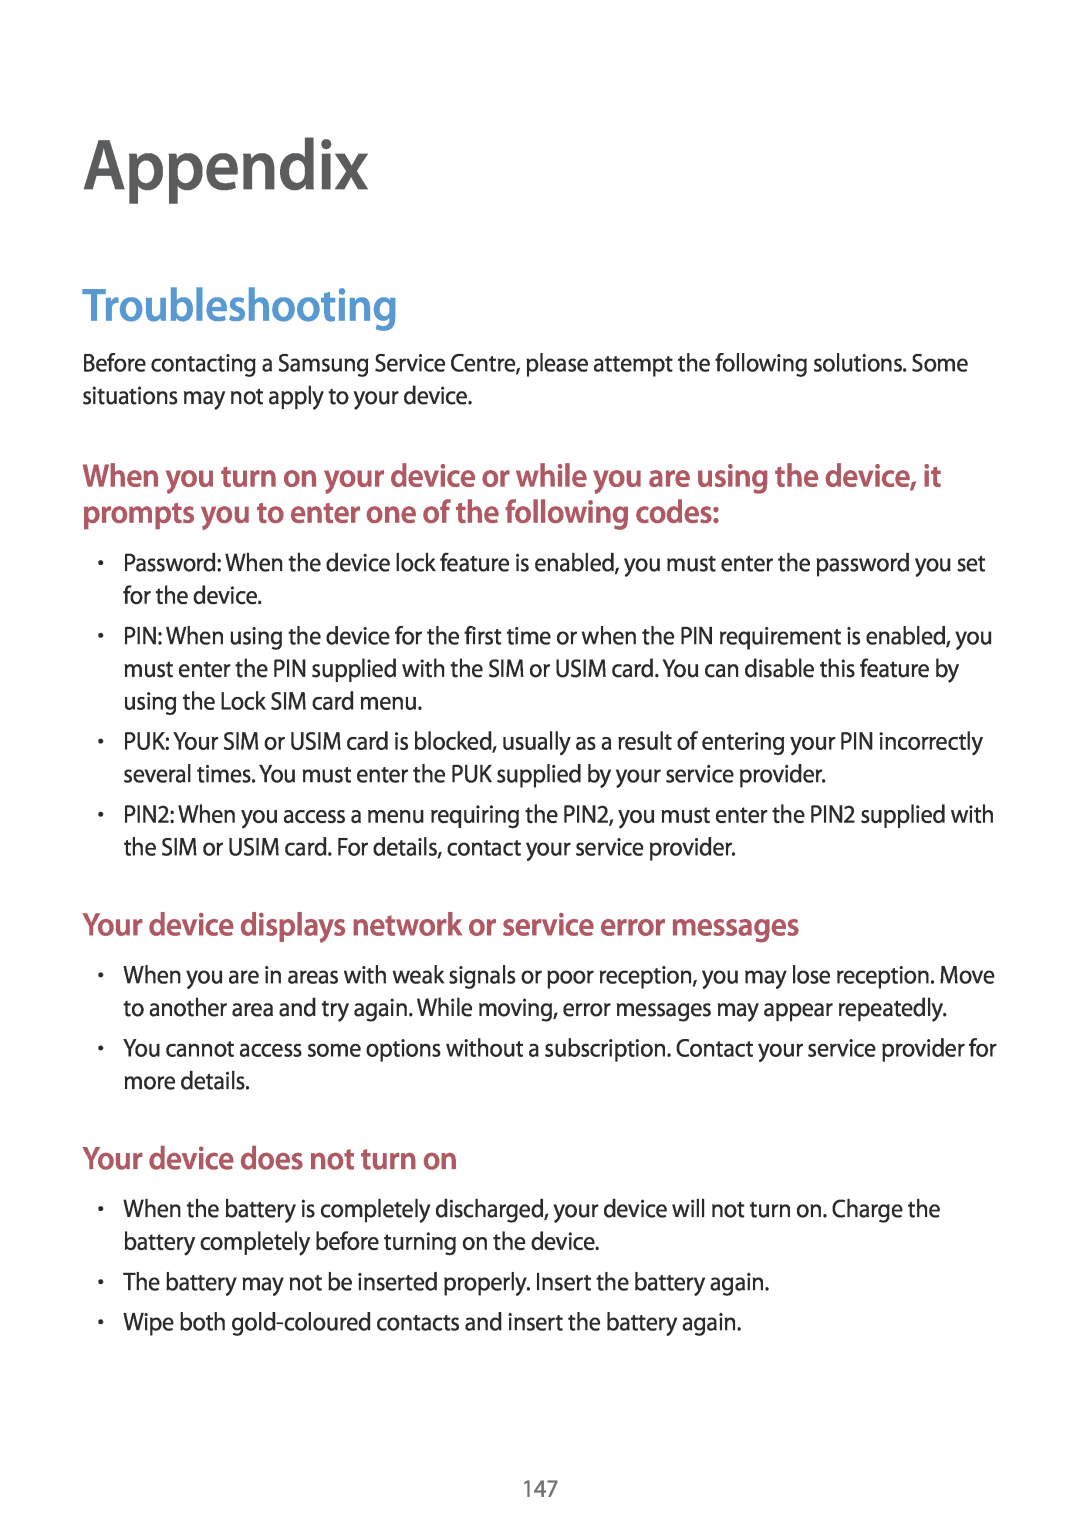 Samsung SM-P9000ZKATPH, SM-P9000ZWAATO Appendix, Troubleshooting, Your device displays network or service error messages 